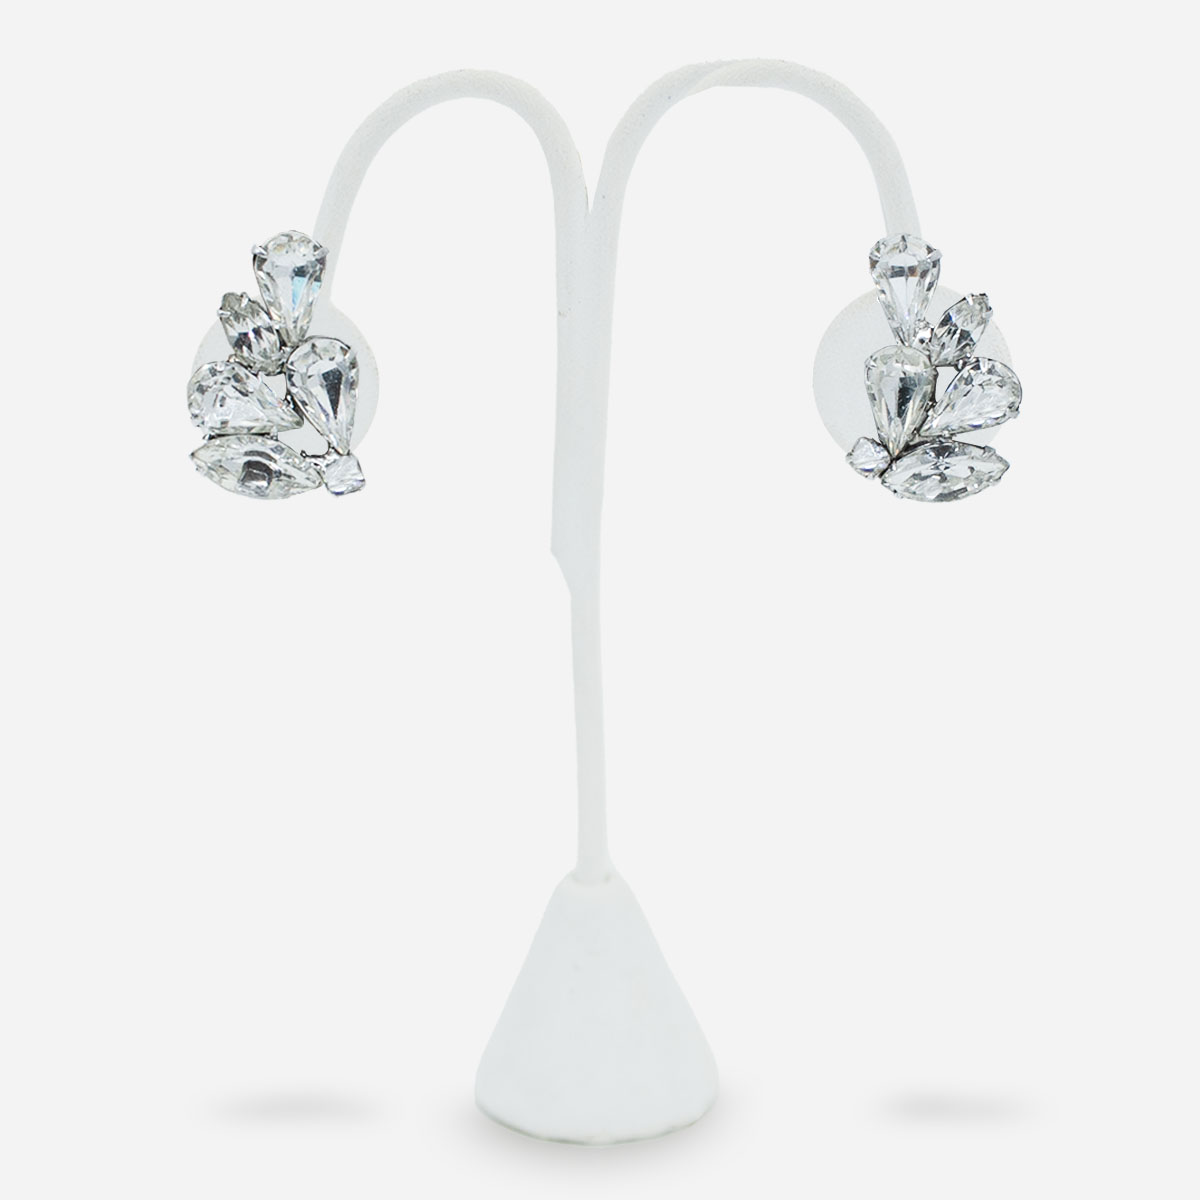 Vintage Cocktail earrings, 1950s Weiss Clip Earrings